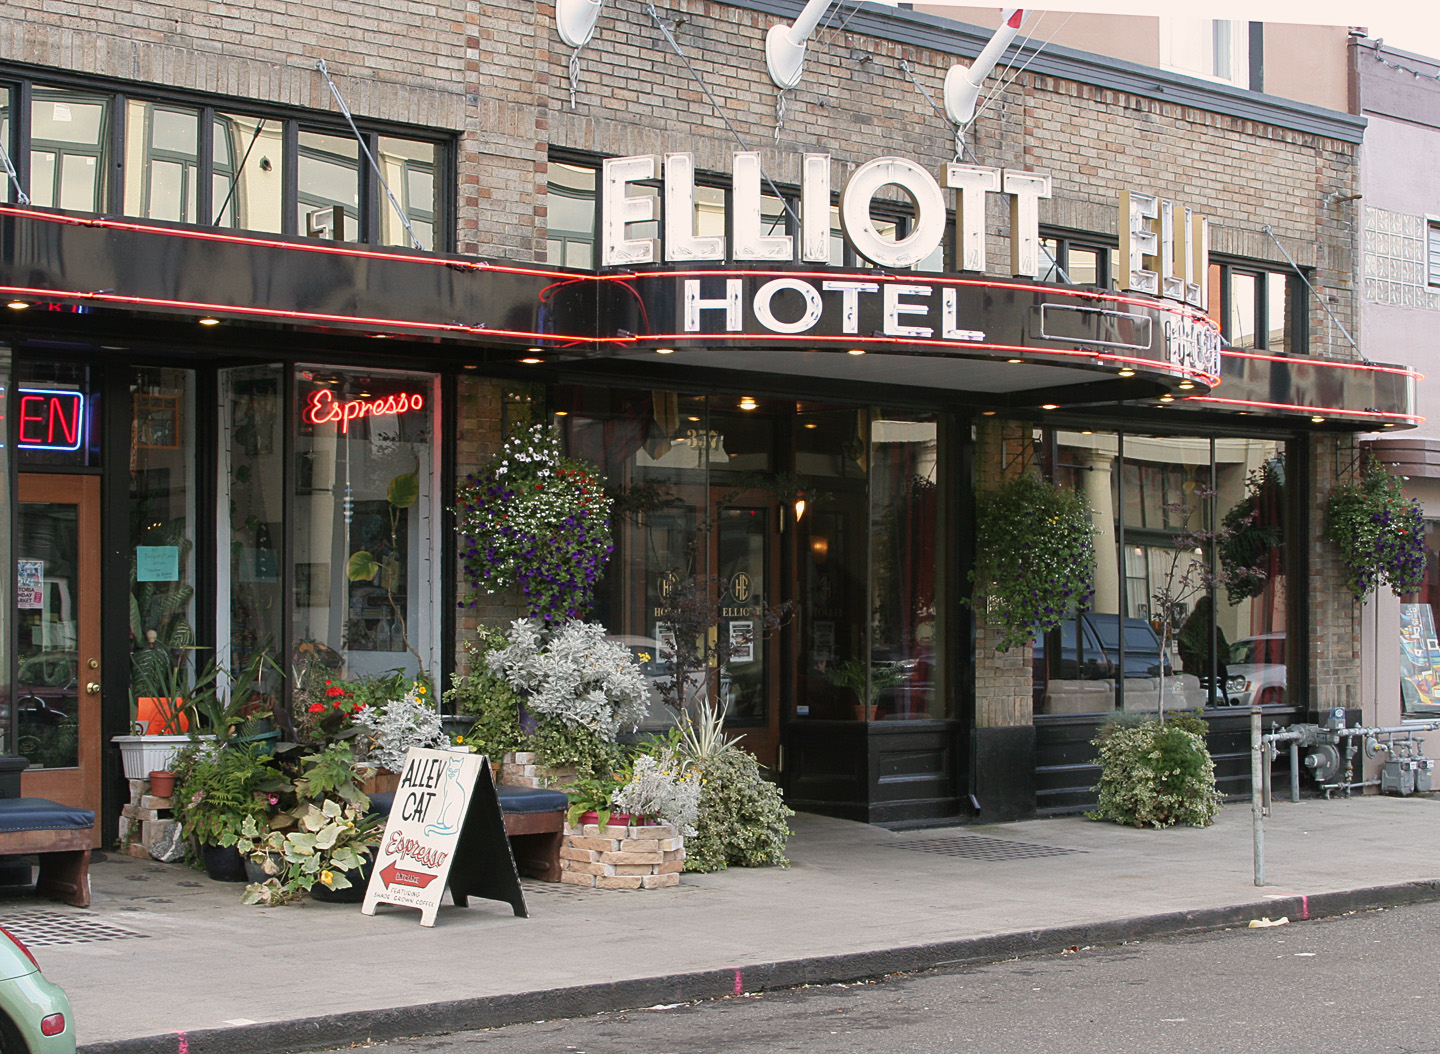 the Hotel Elliott